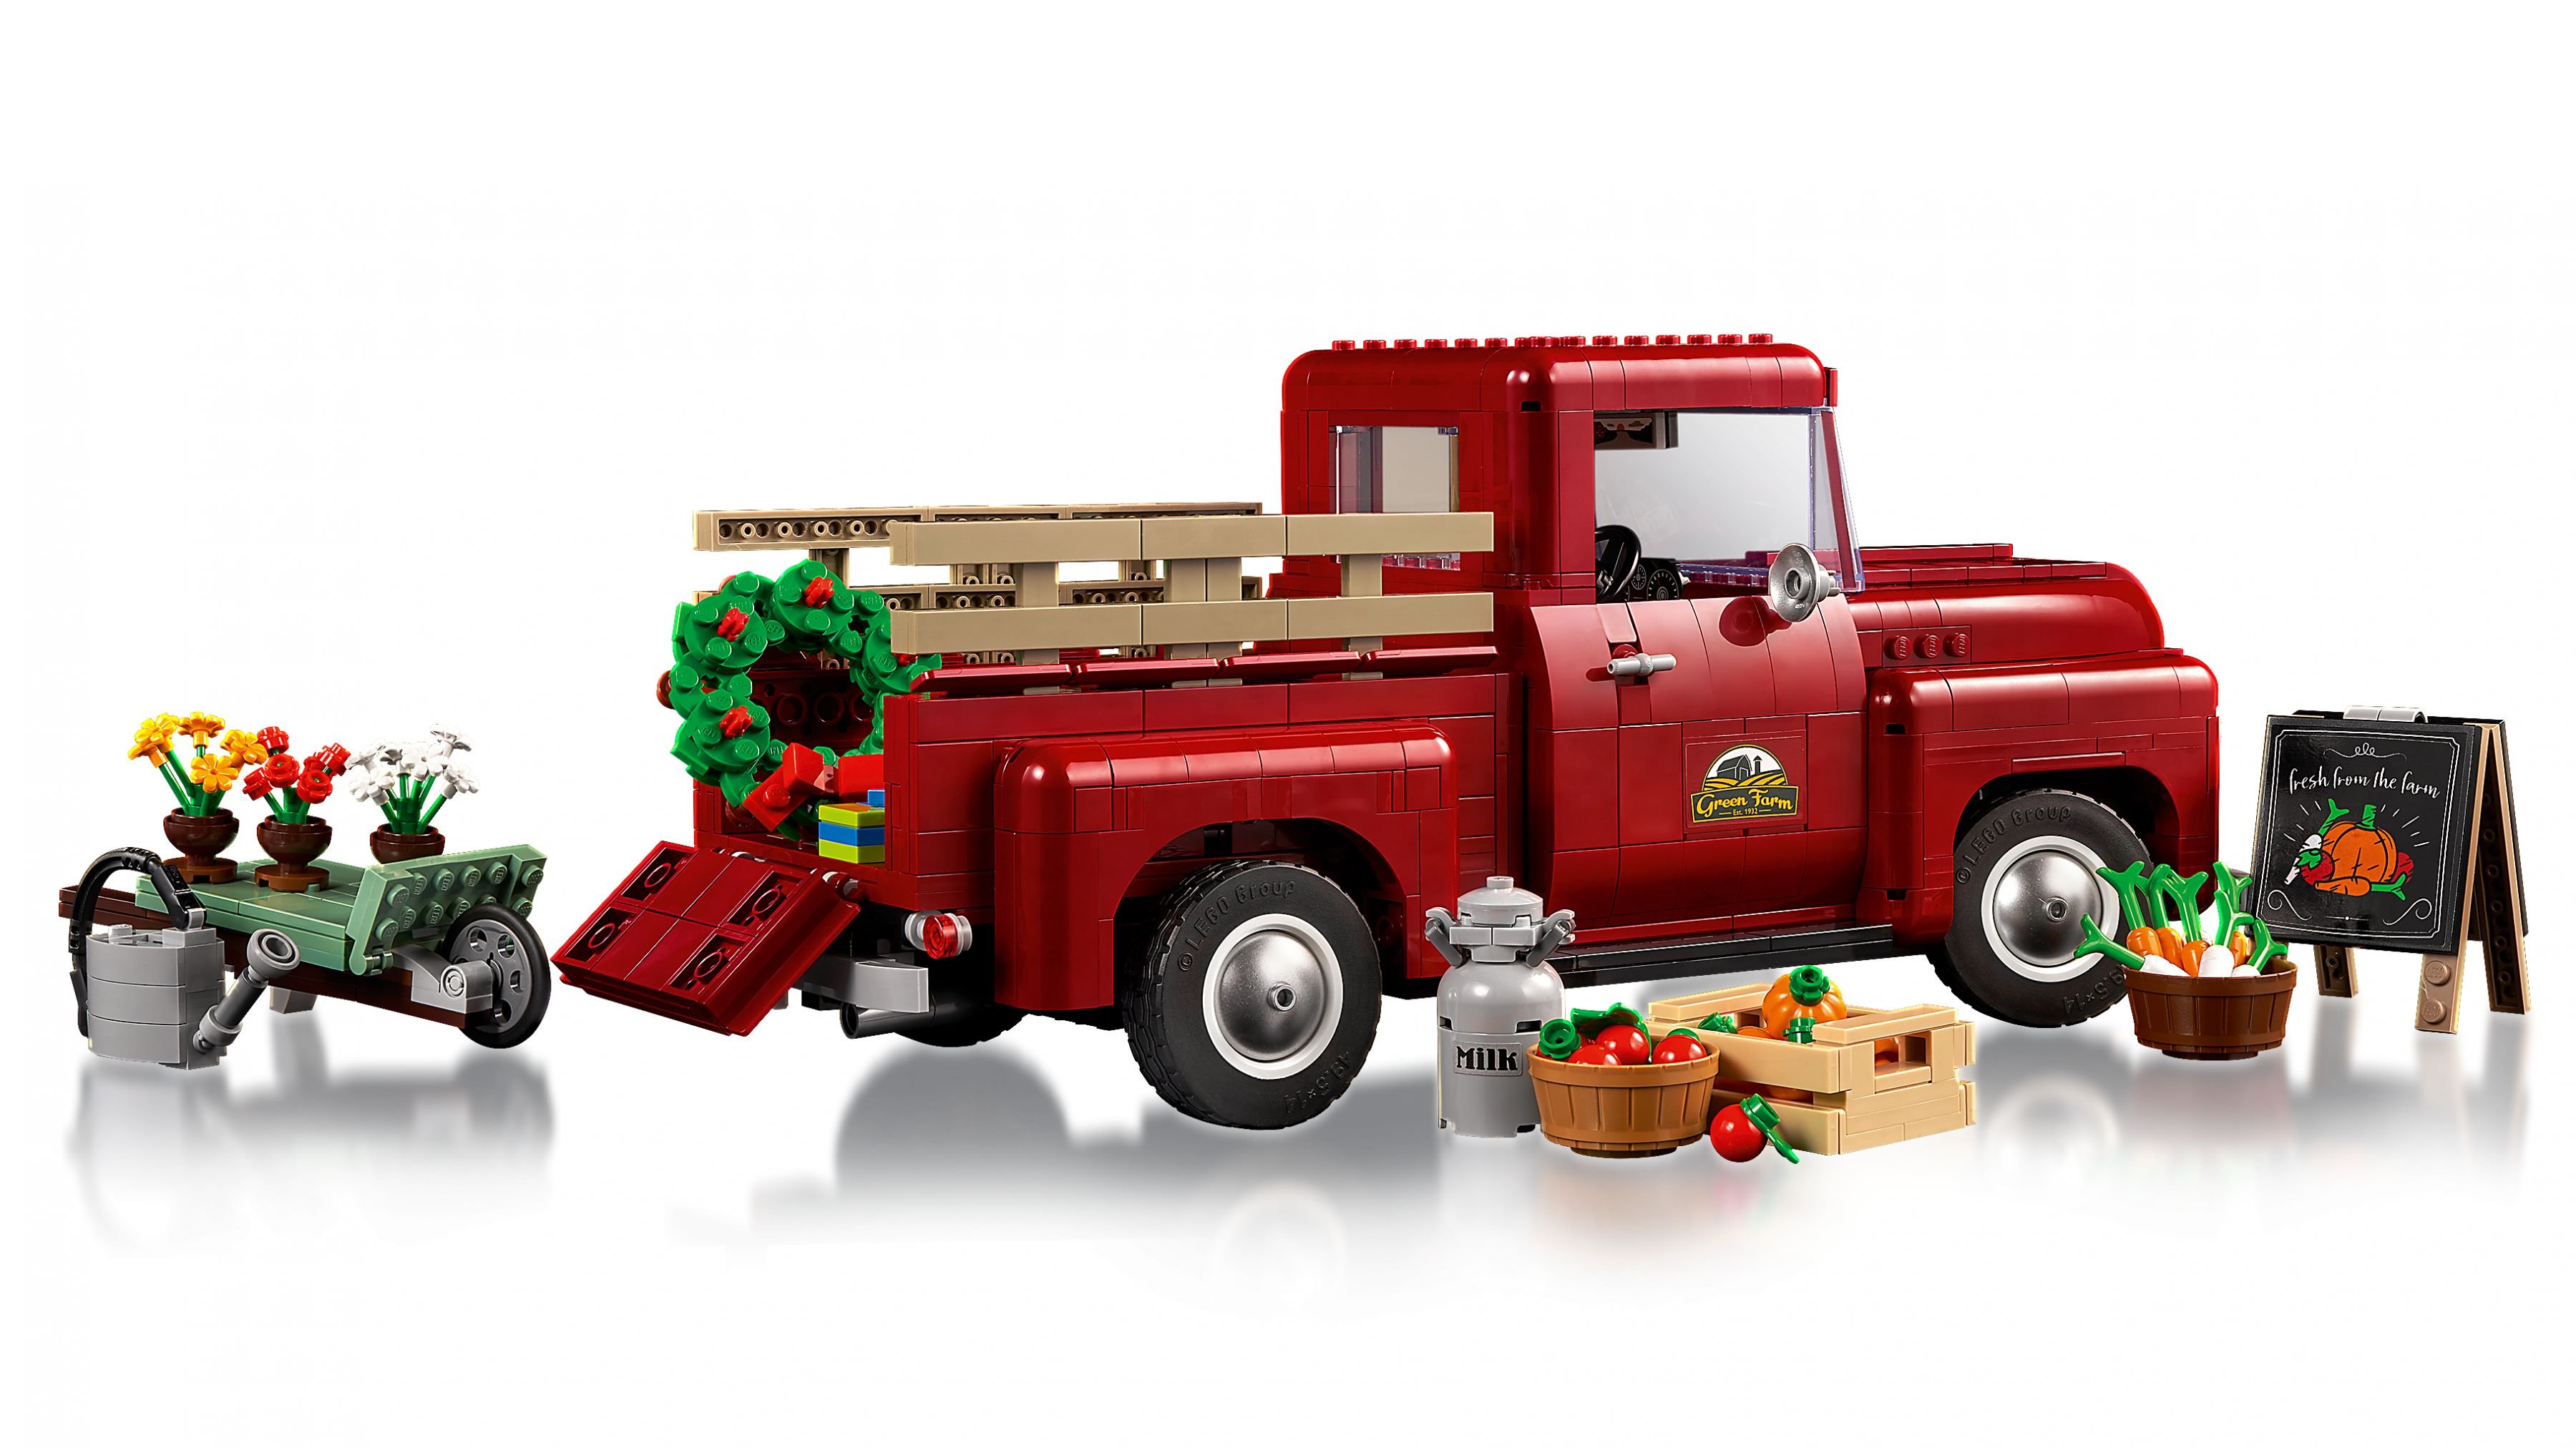 LEGO Advanced Models 10290 Pickup LEGO_10290_web_sec02_nobg.jpg